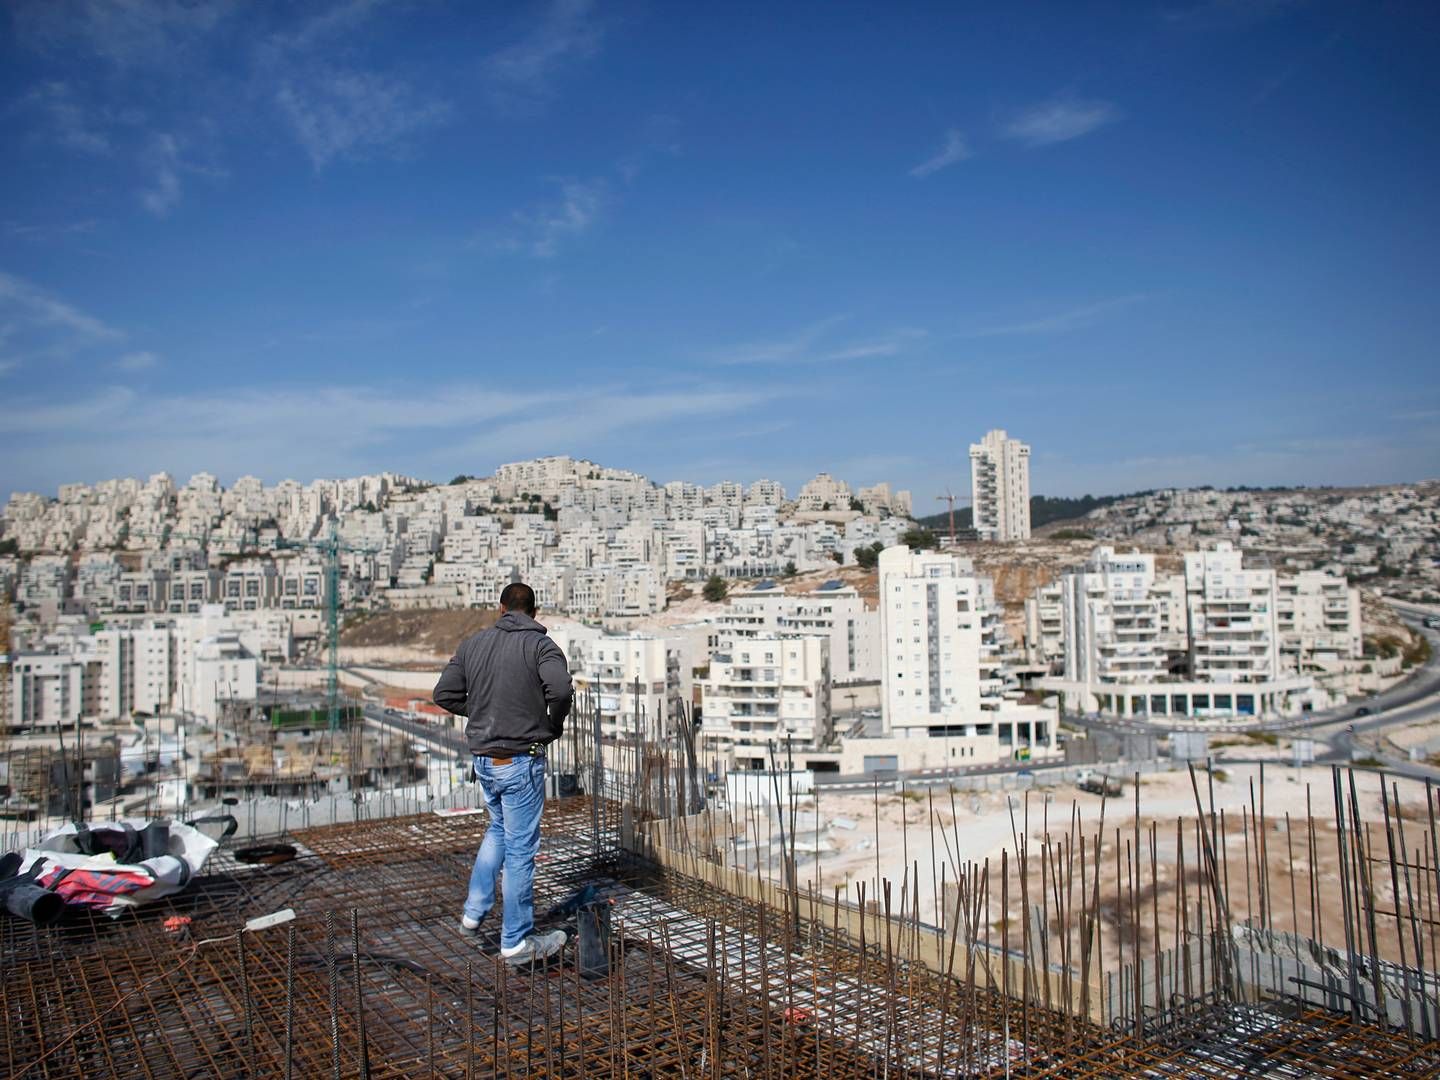 Settlements in the occupied West Bank. | Photo: Ronen Zvulun/Reuters/Ritzau Scanpix